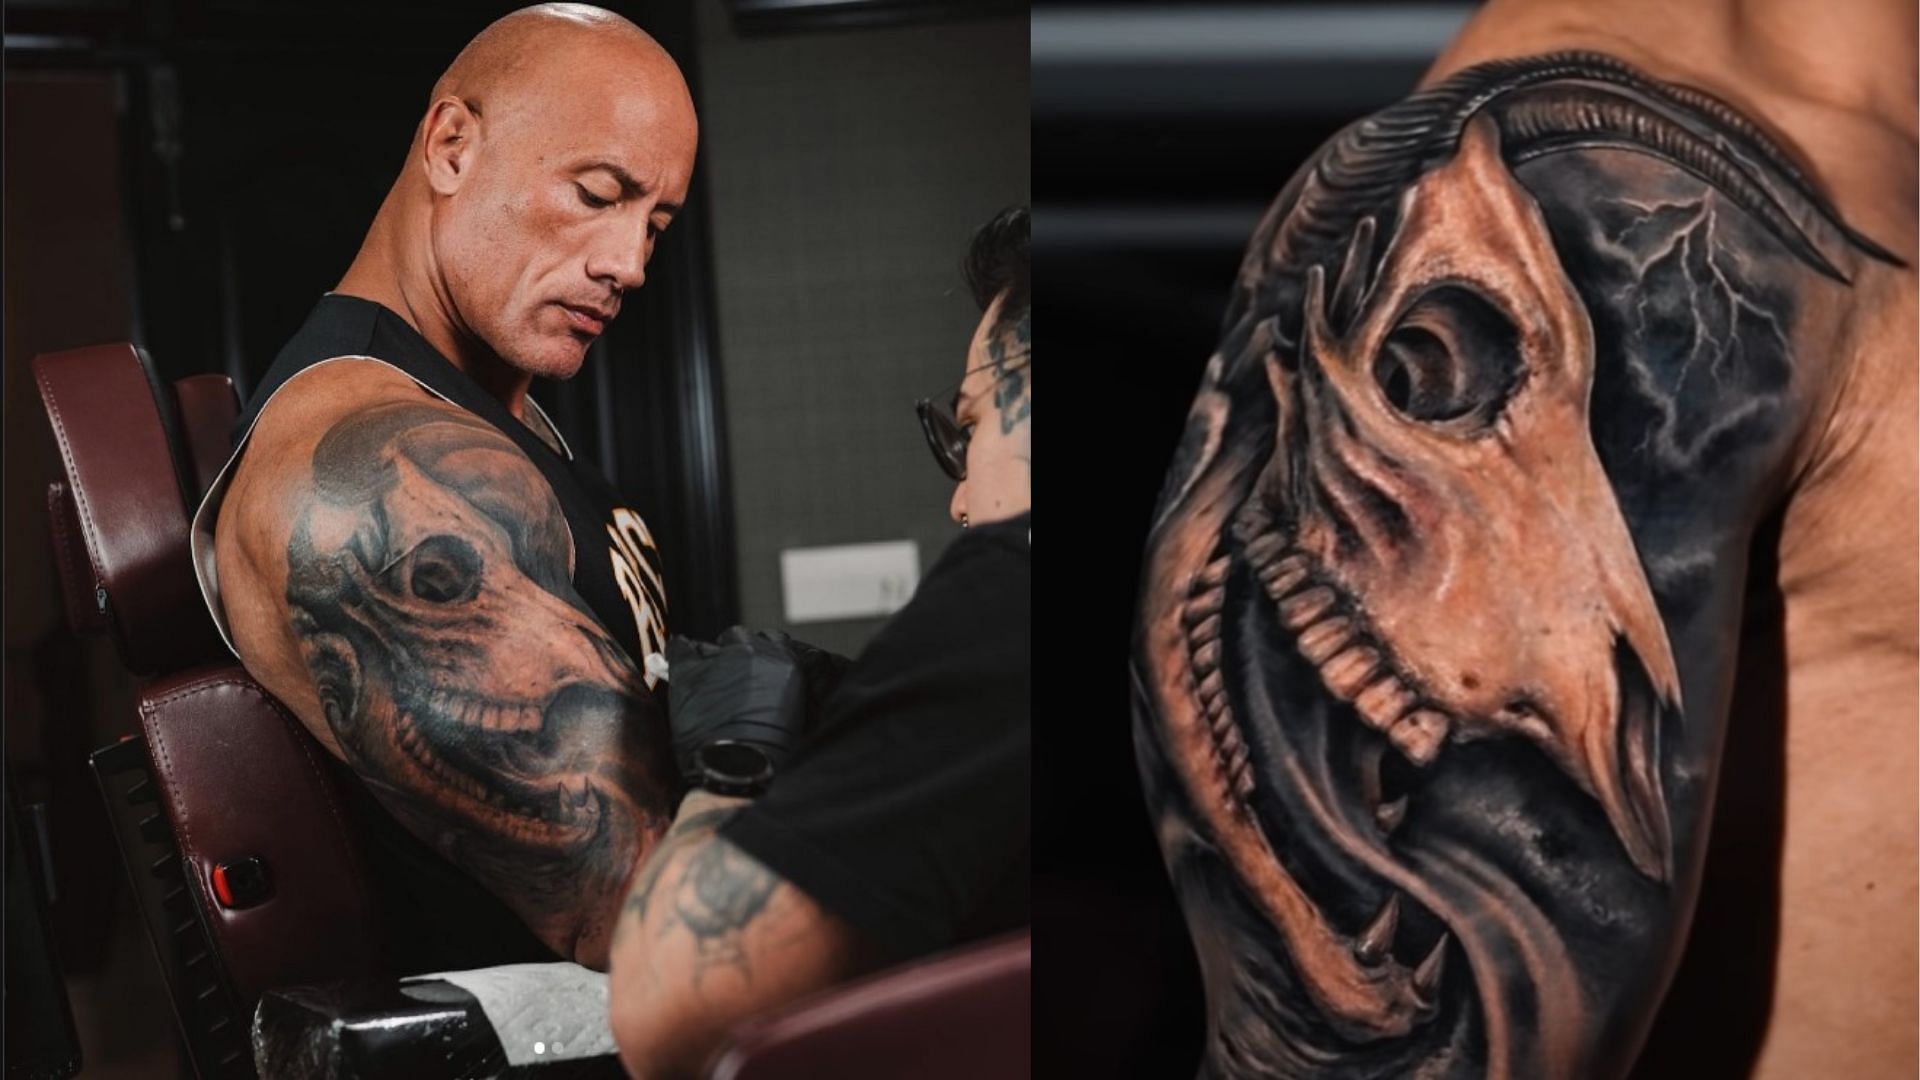 The Rock's tattoo: Why did The Rock upgrade his Brahma Bull tattoo?